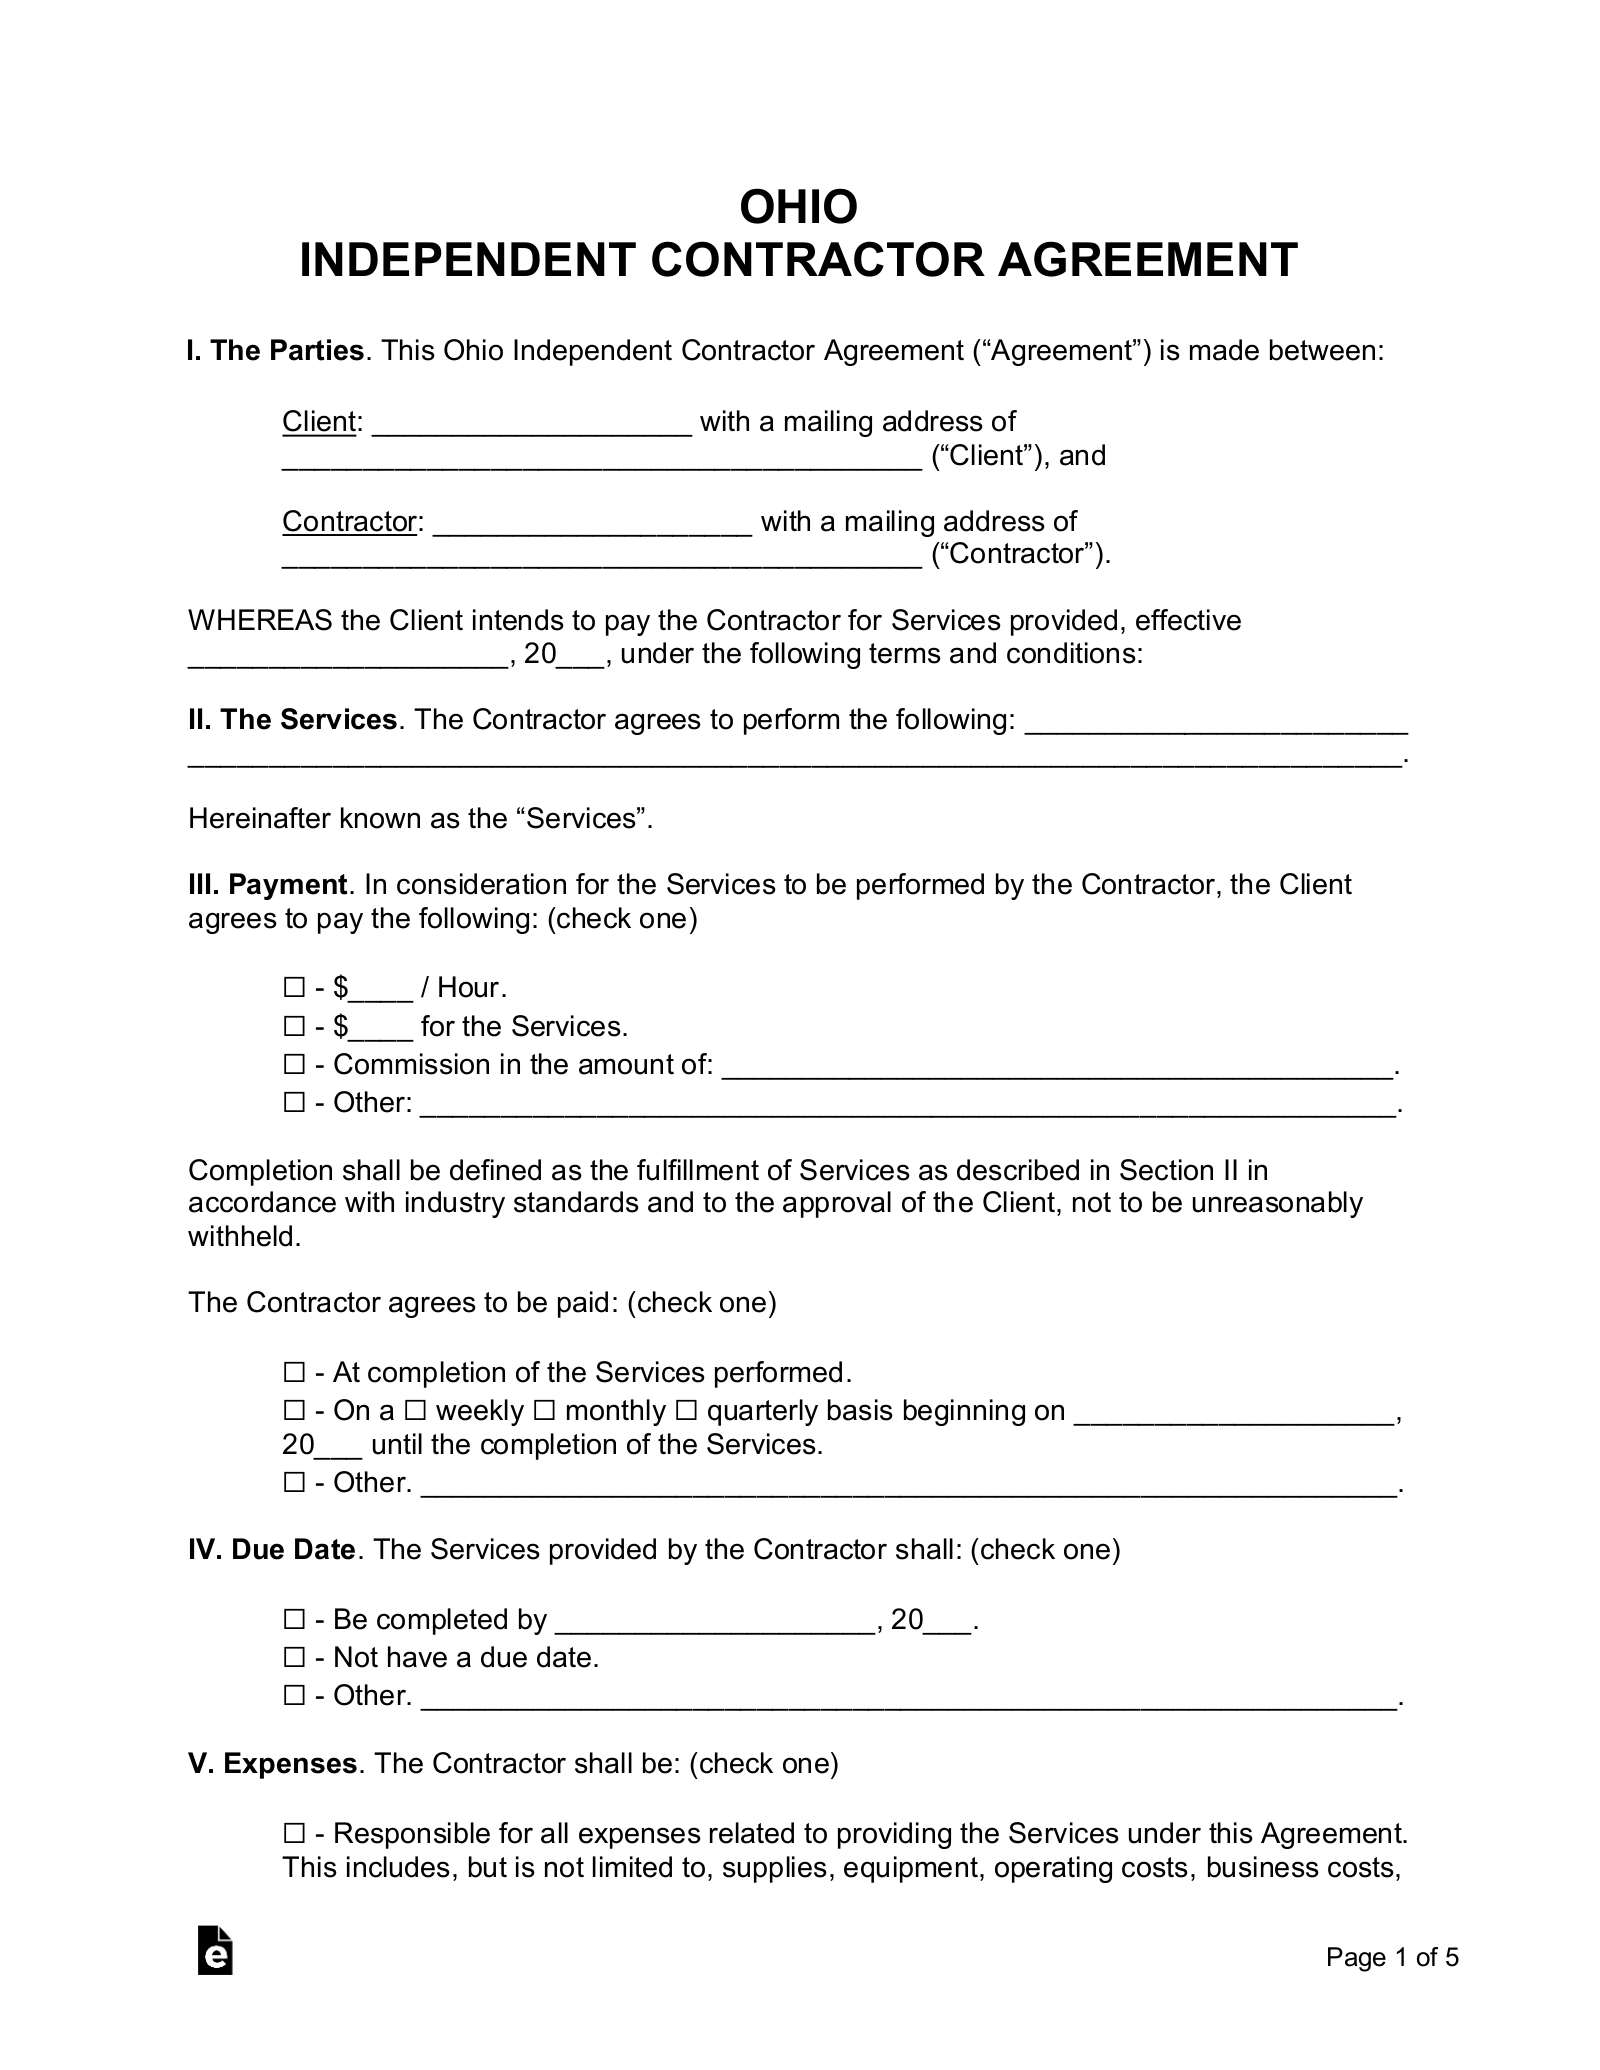 Ohio Independent Contractor Agreement